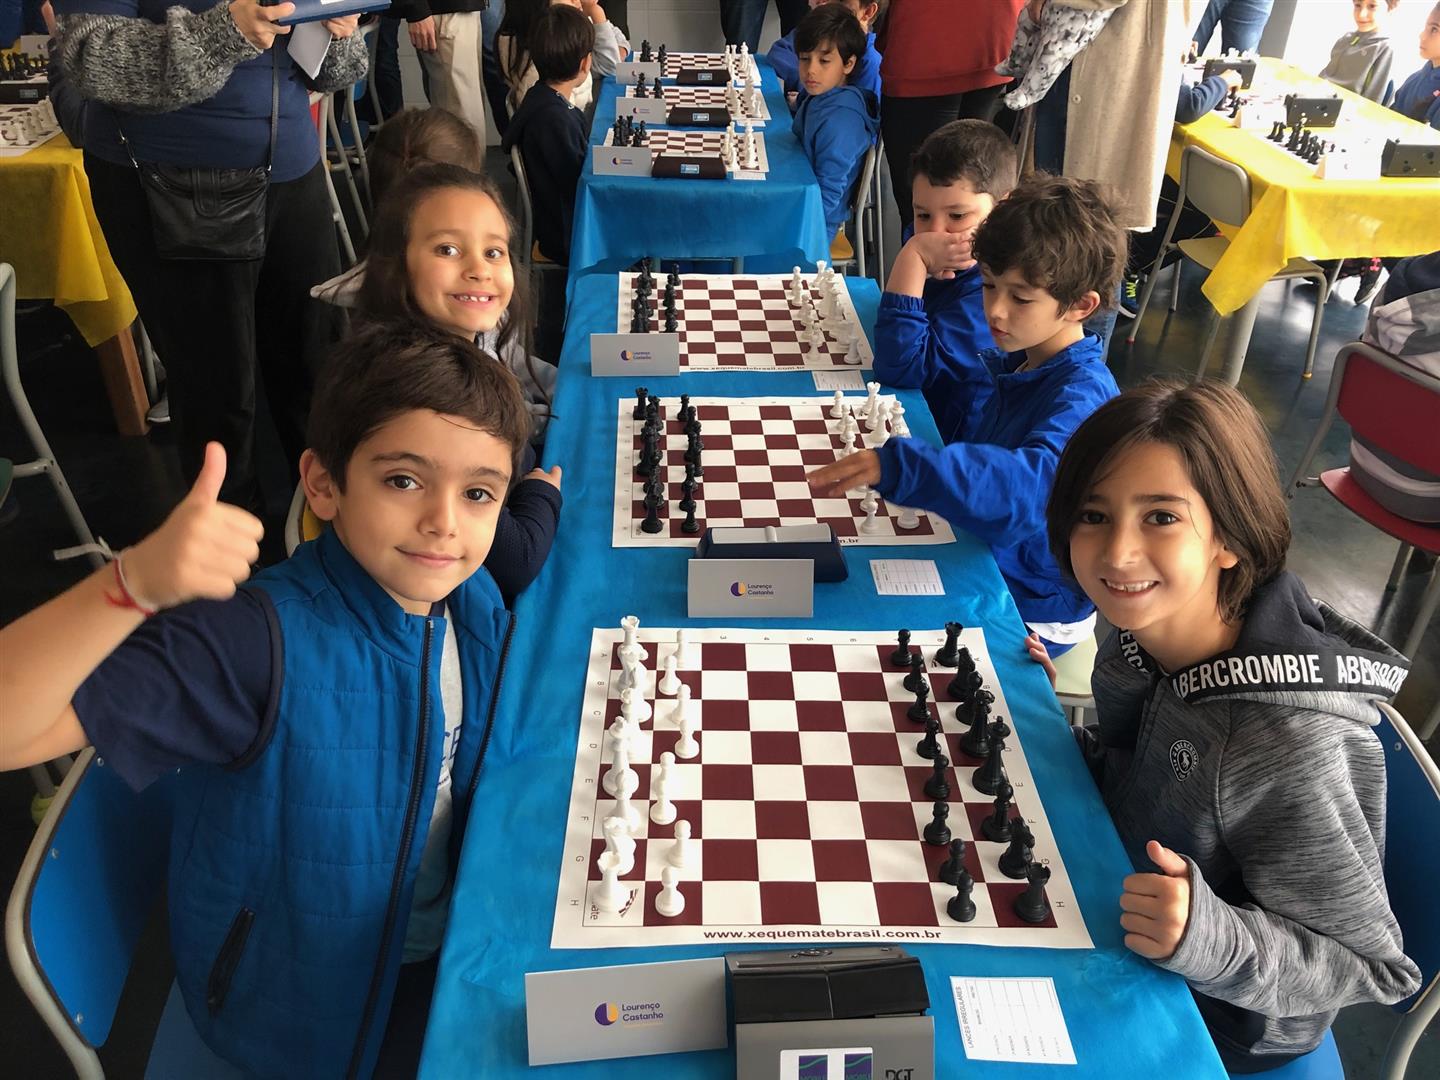 Escolas de plataforma definidas para campeonatos mundiais de xadrez